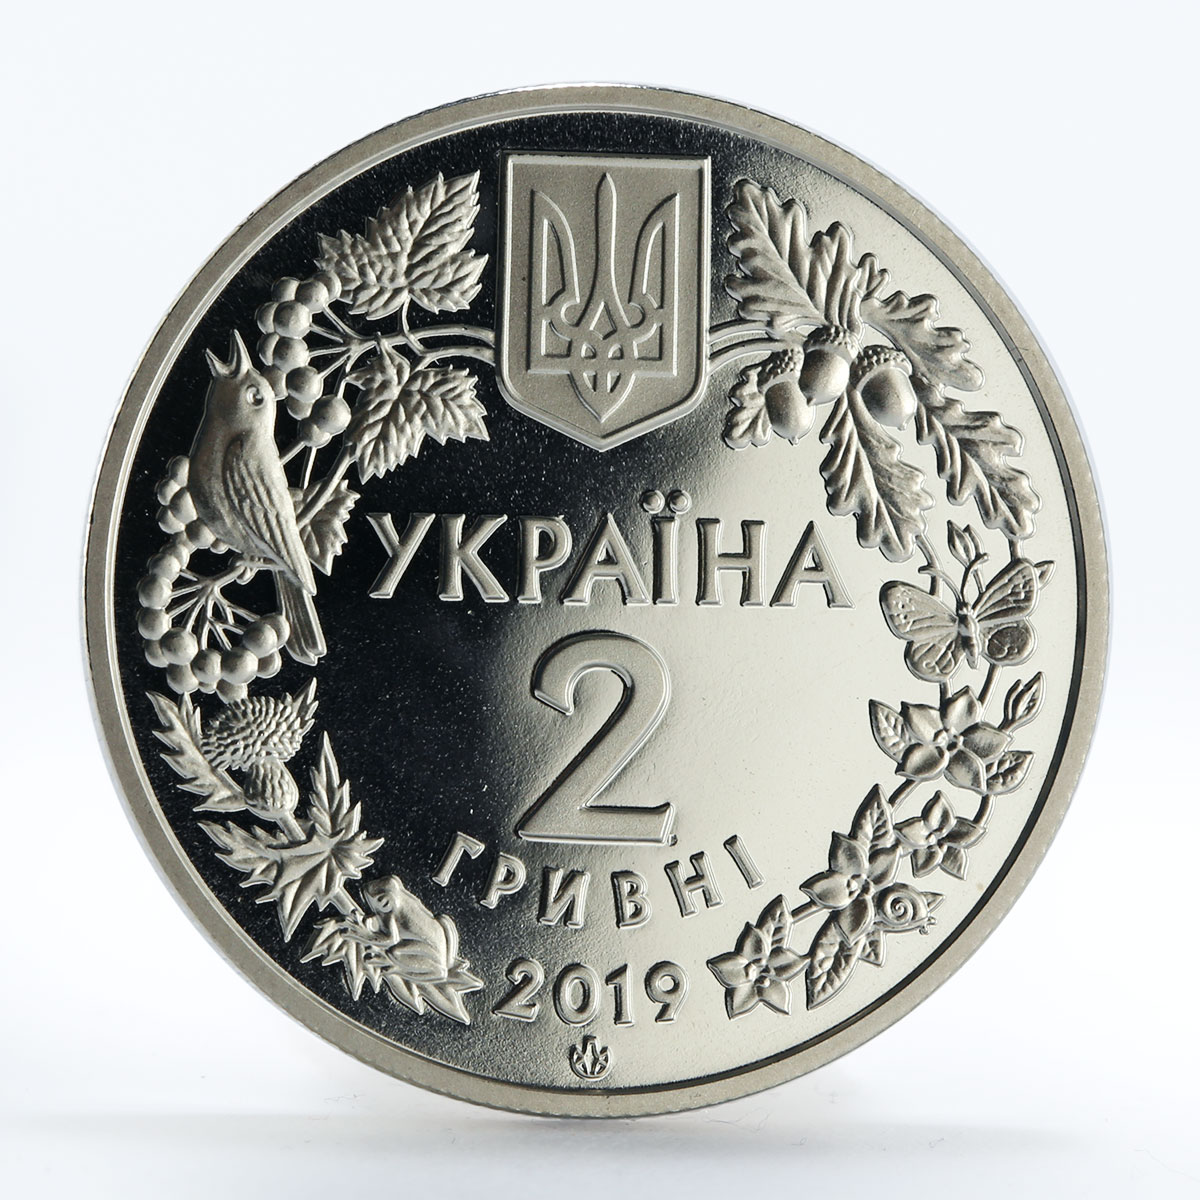 Ukraine 2 hryvni White-tailed eagle predatory bird nickel coin 2019